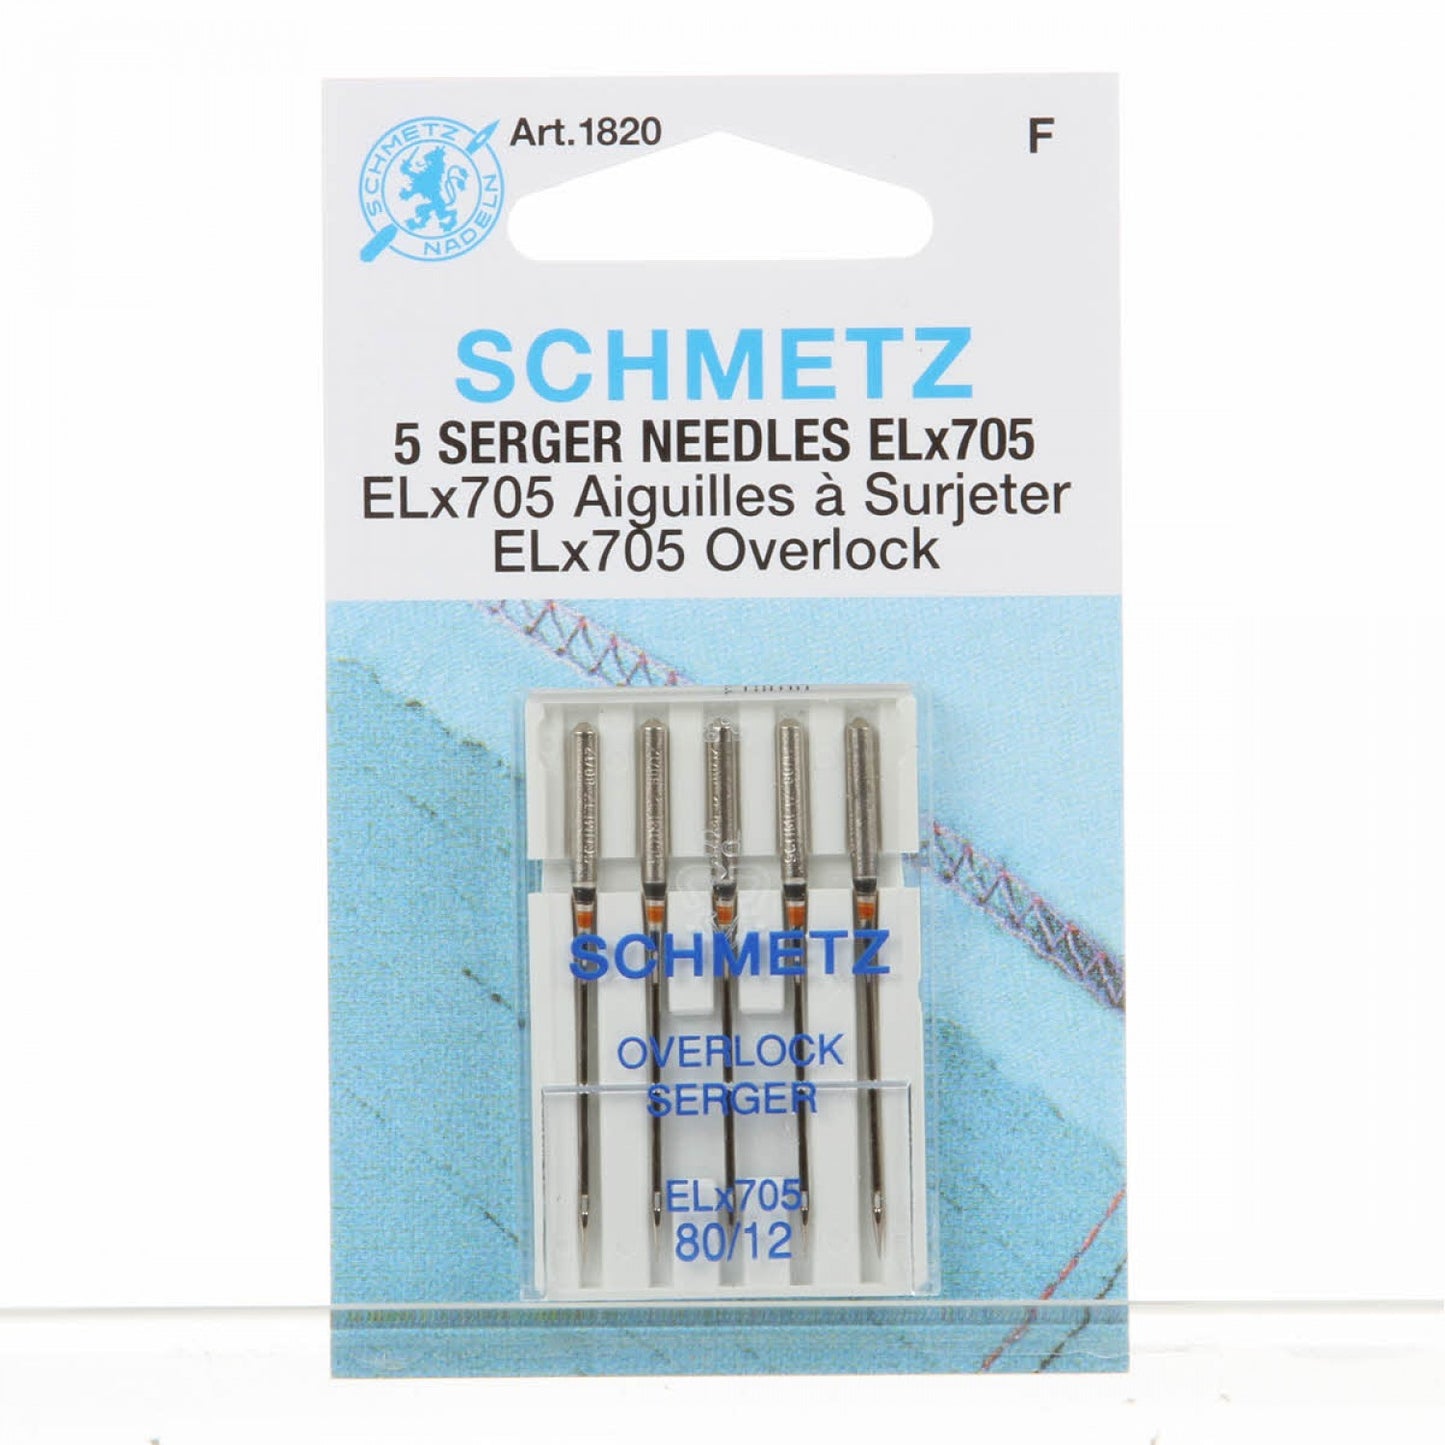 Schmetz Overlock / Serger / Coverstitch Machine Needles ELX705 Carded - 80/12 - 5 count